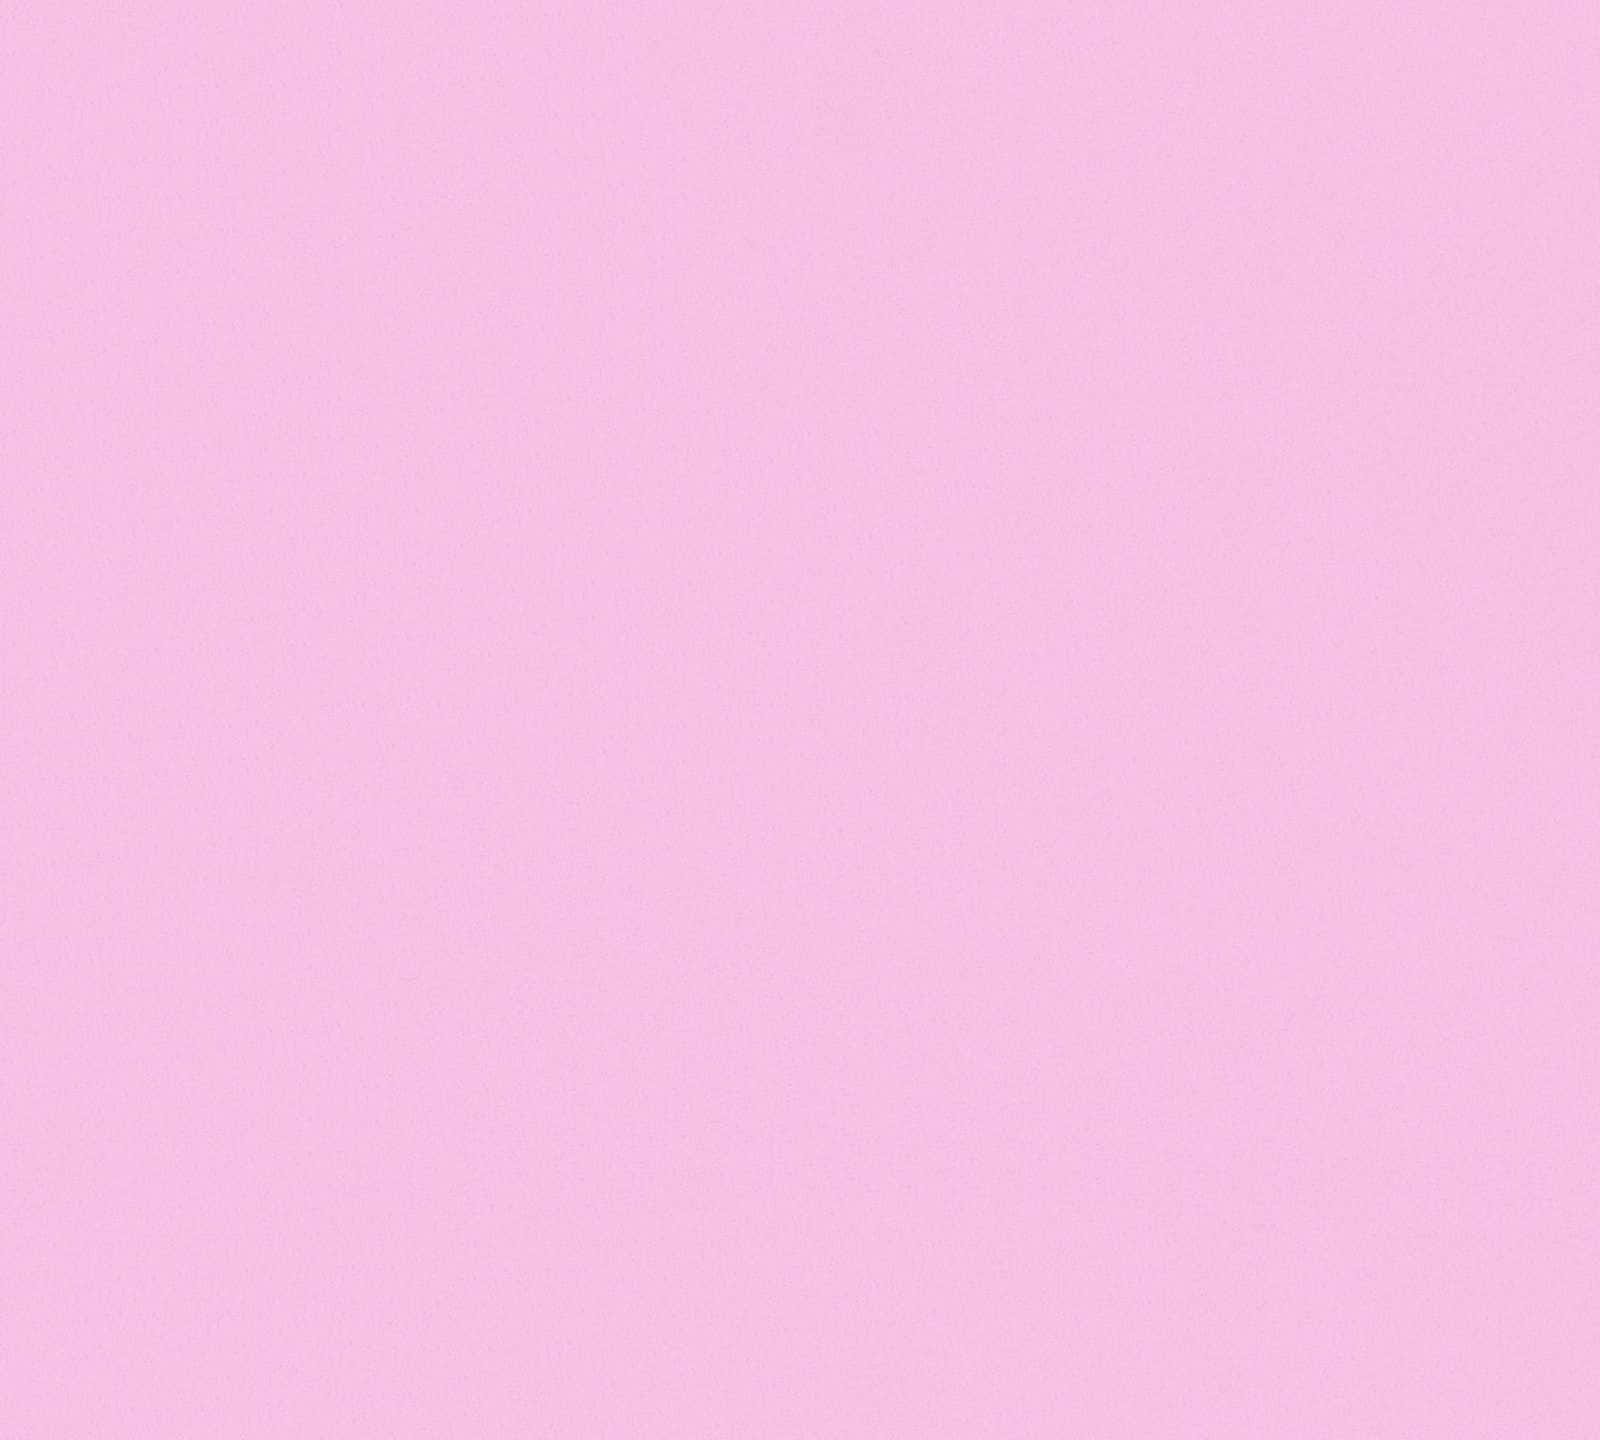 Simply Elegant Pink Background